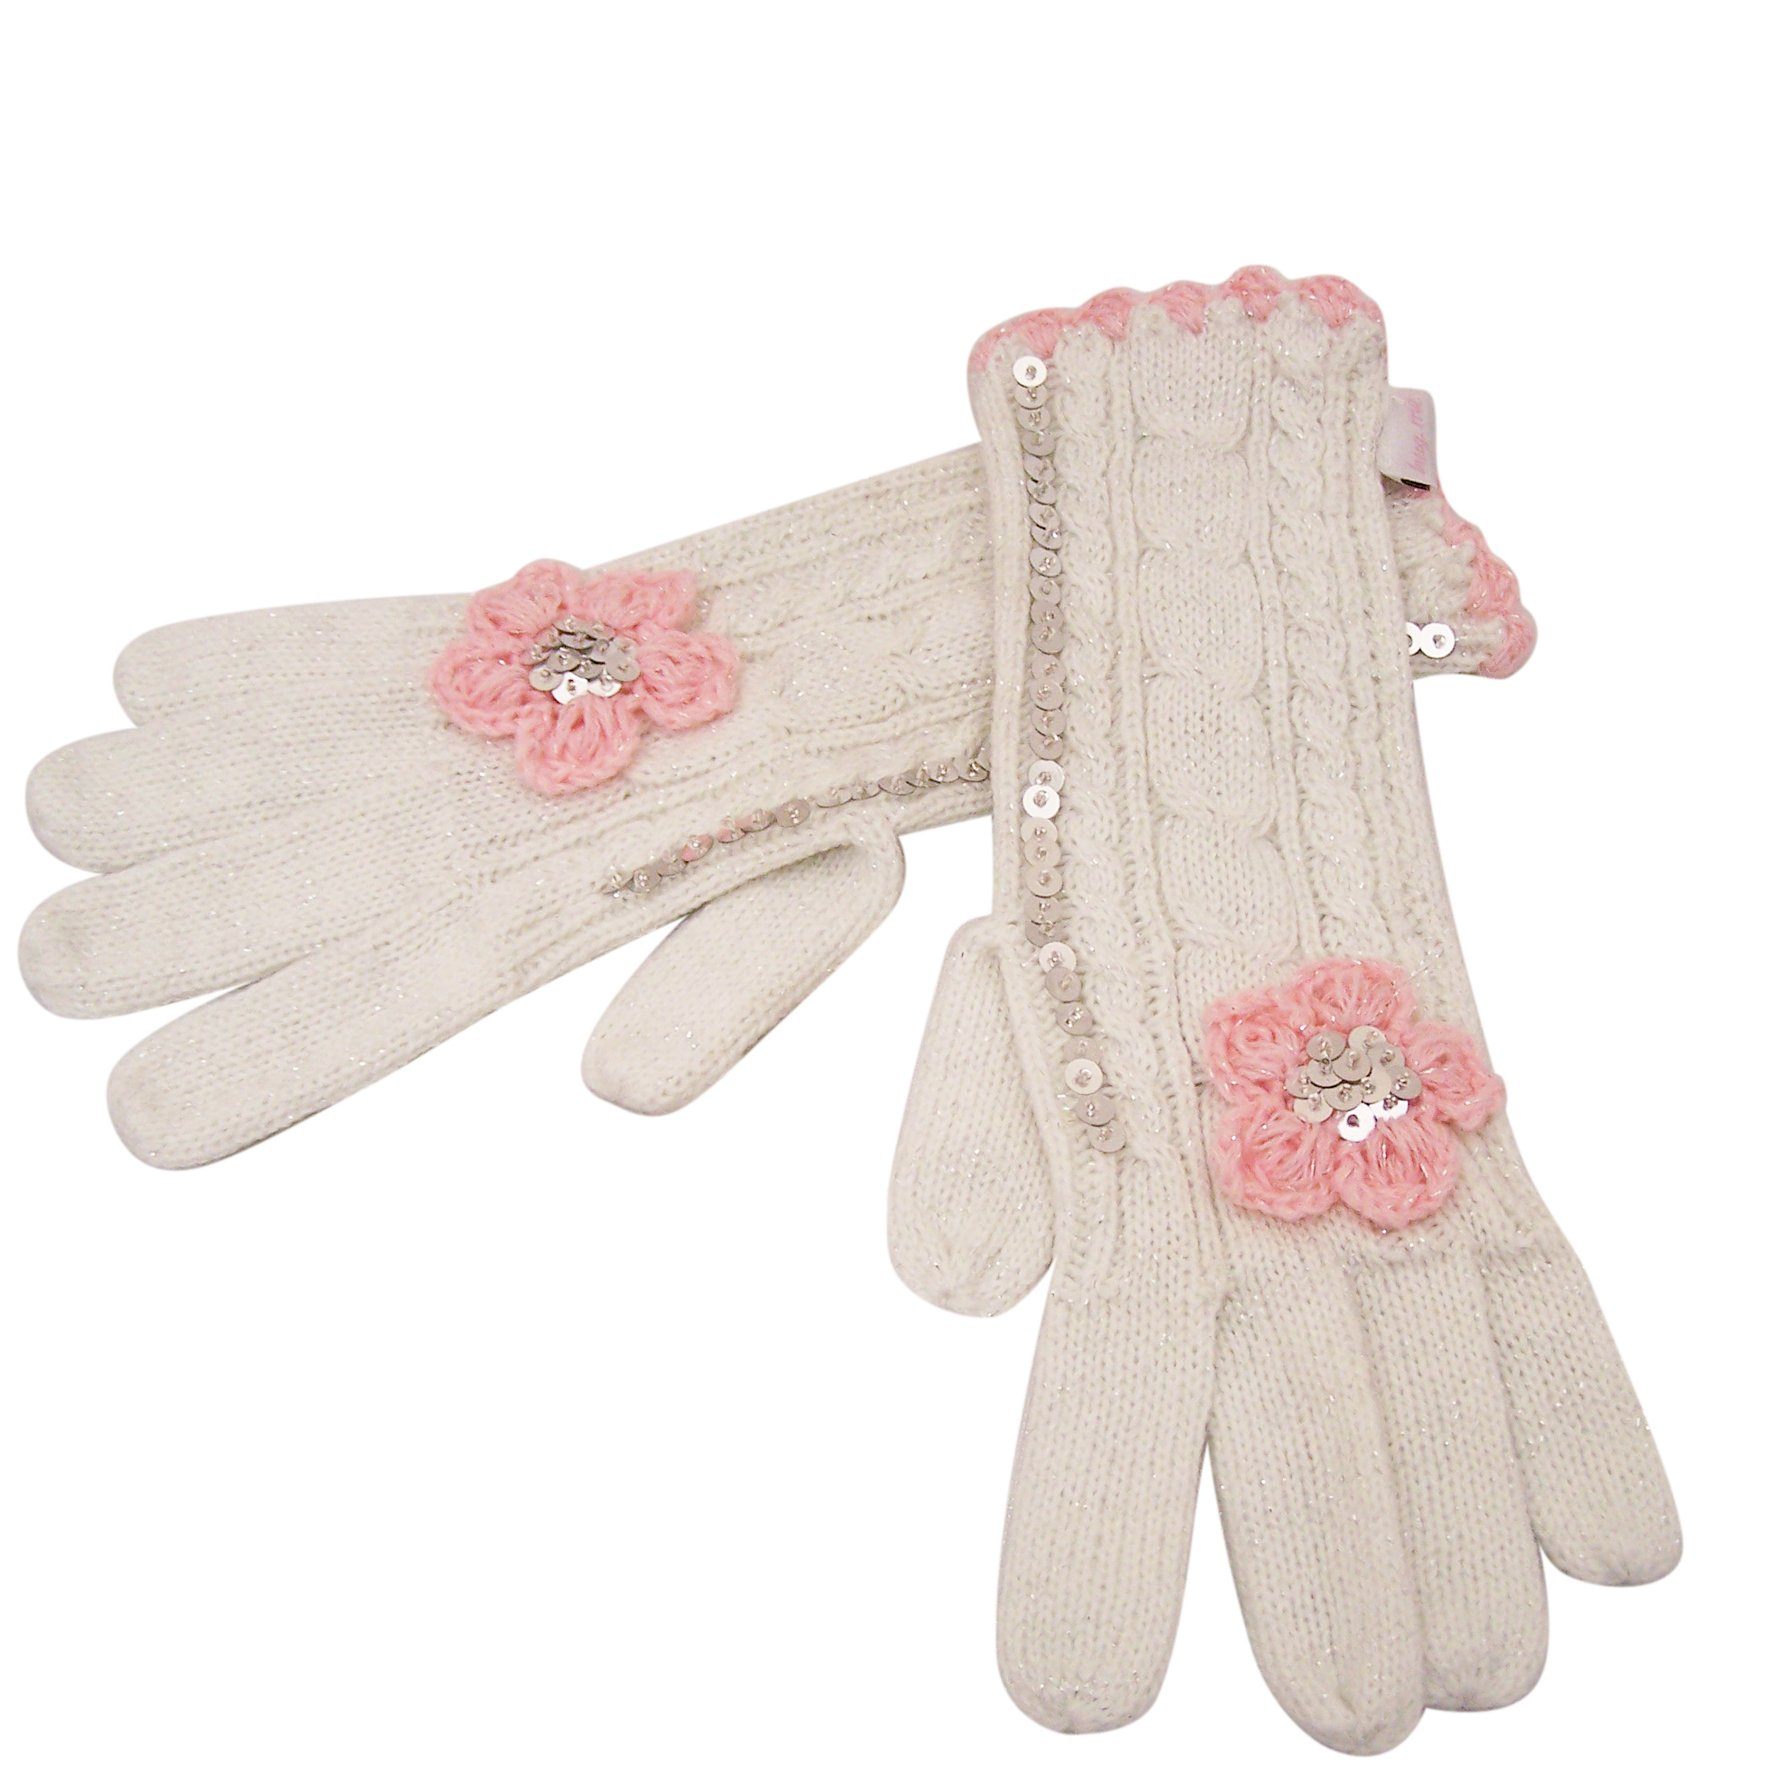 Knitted Flower Gloves Cream with Pink - BouChic 